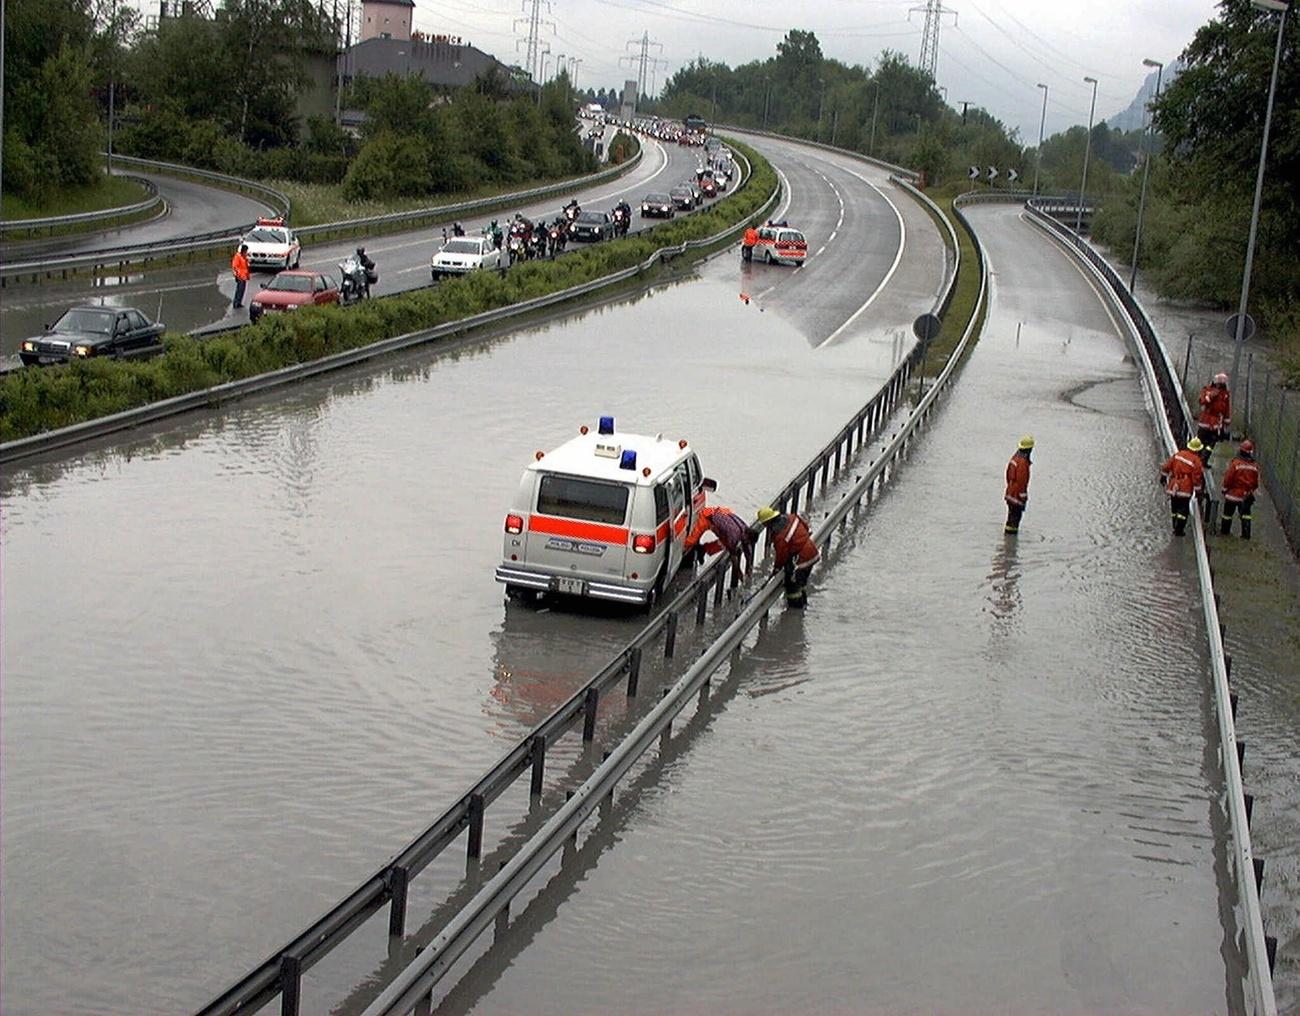 flooding of the motorway near Maienfeld.